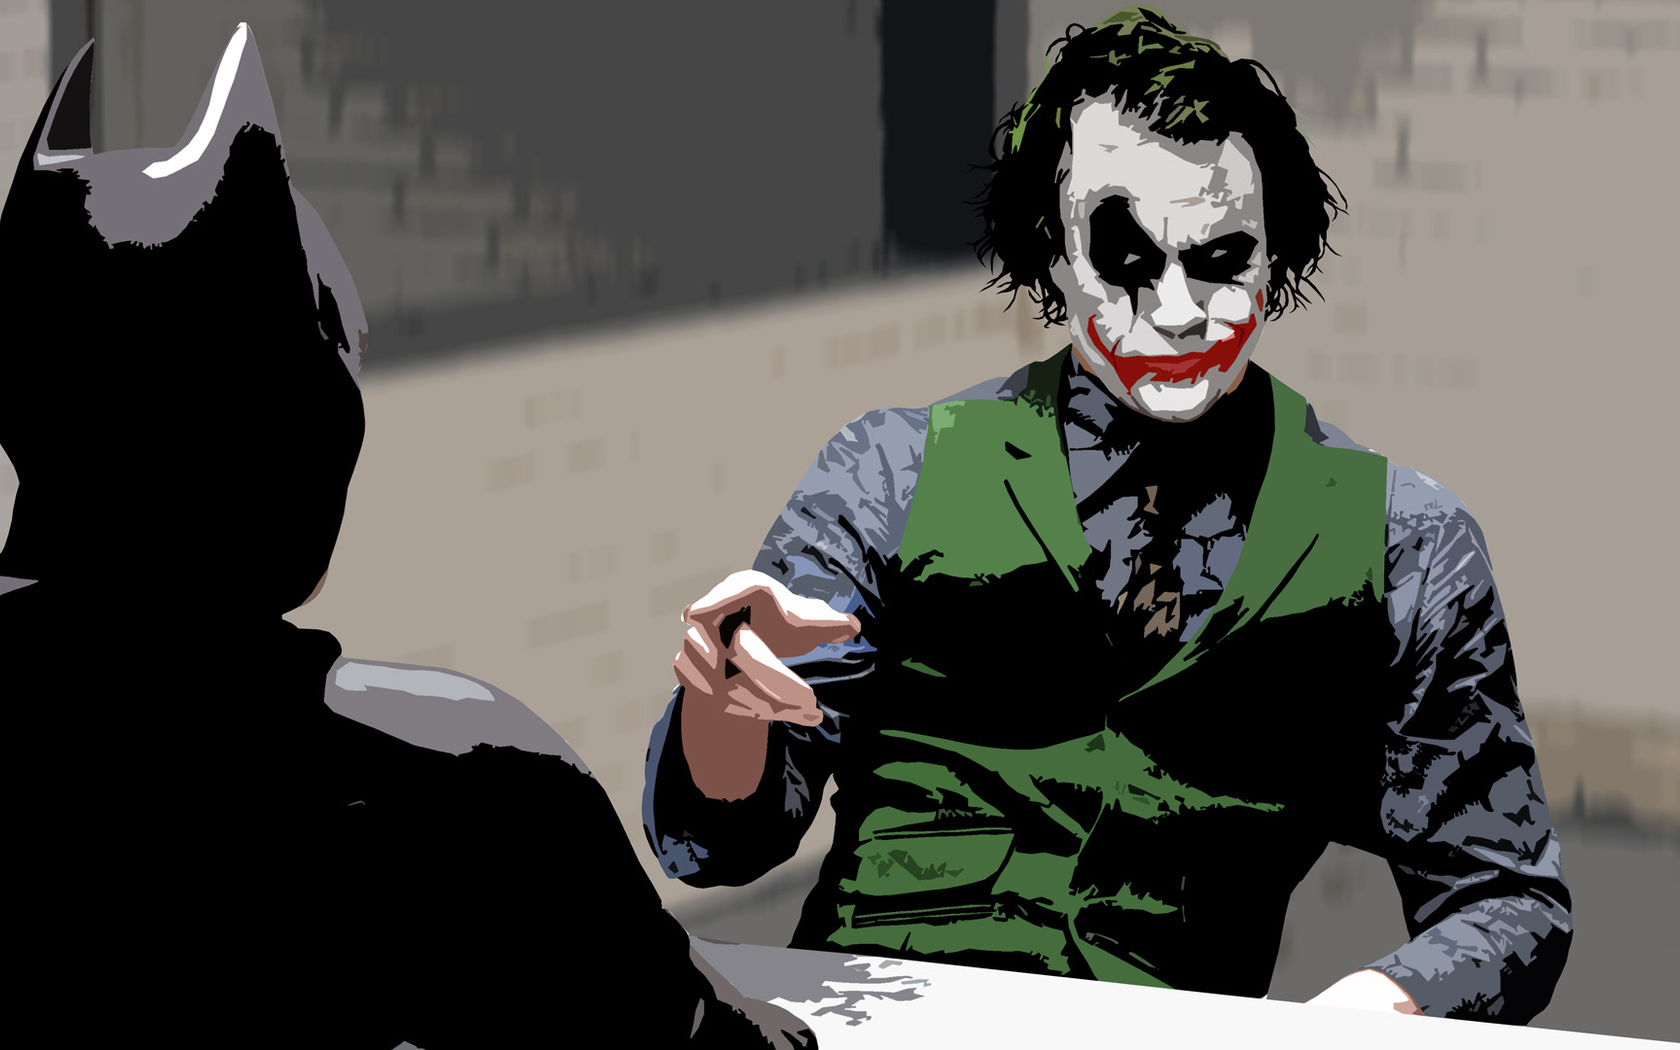 joker, cinema, batman Image for desktop